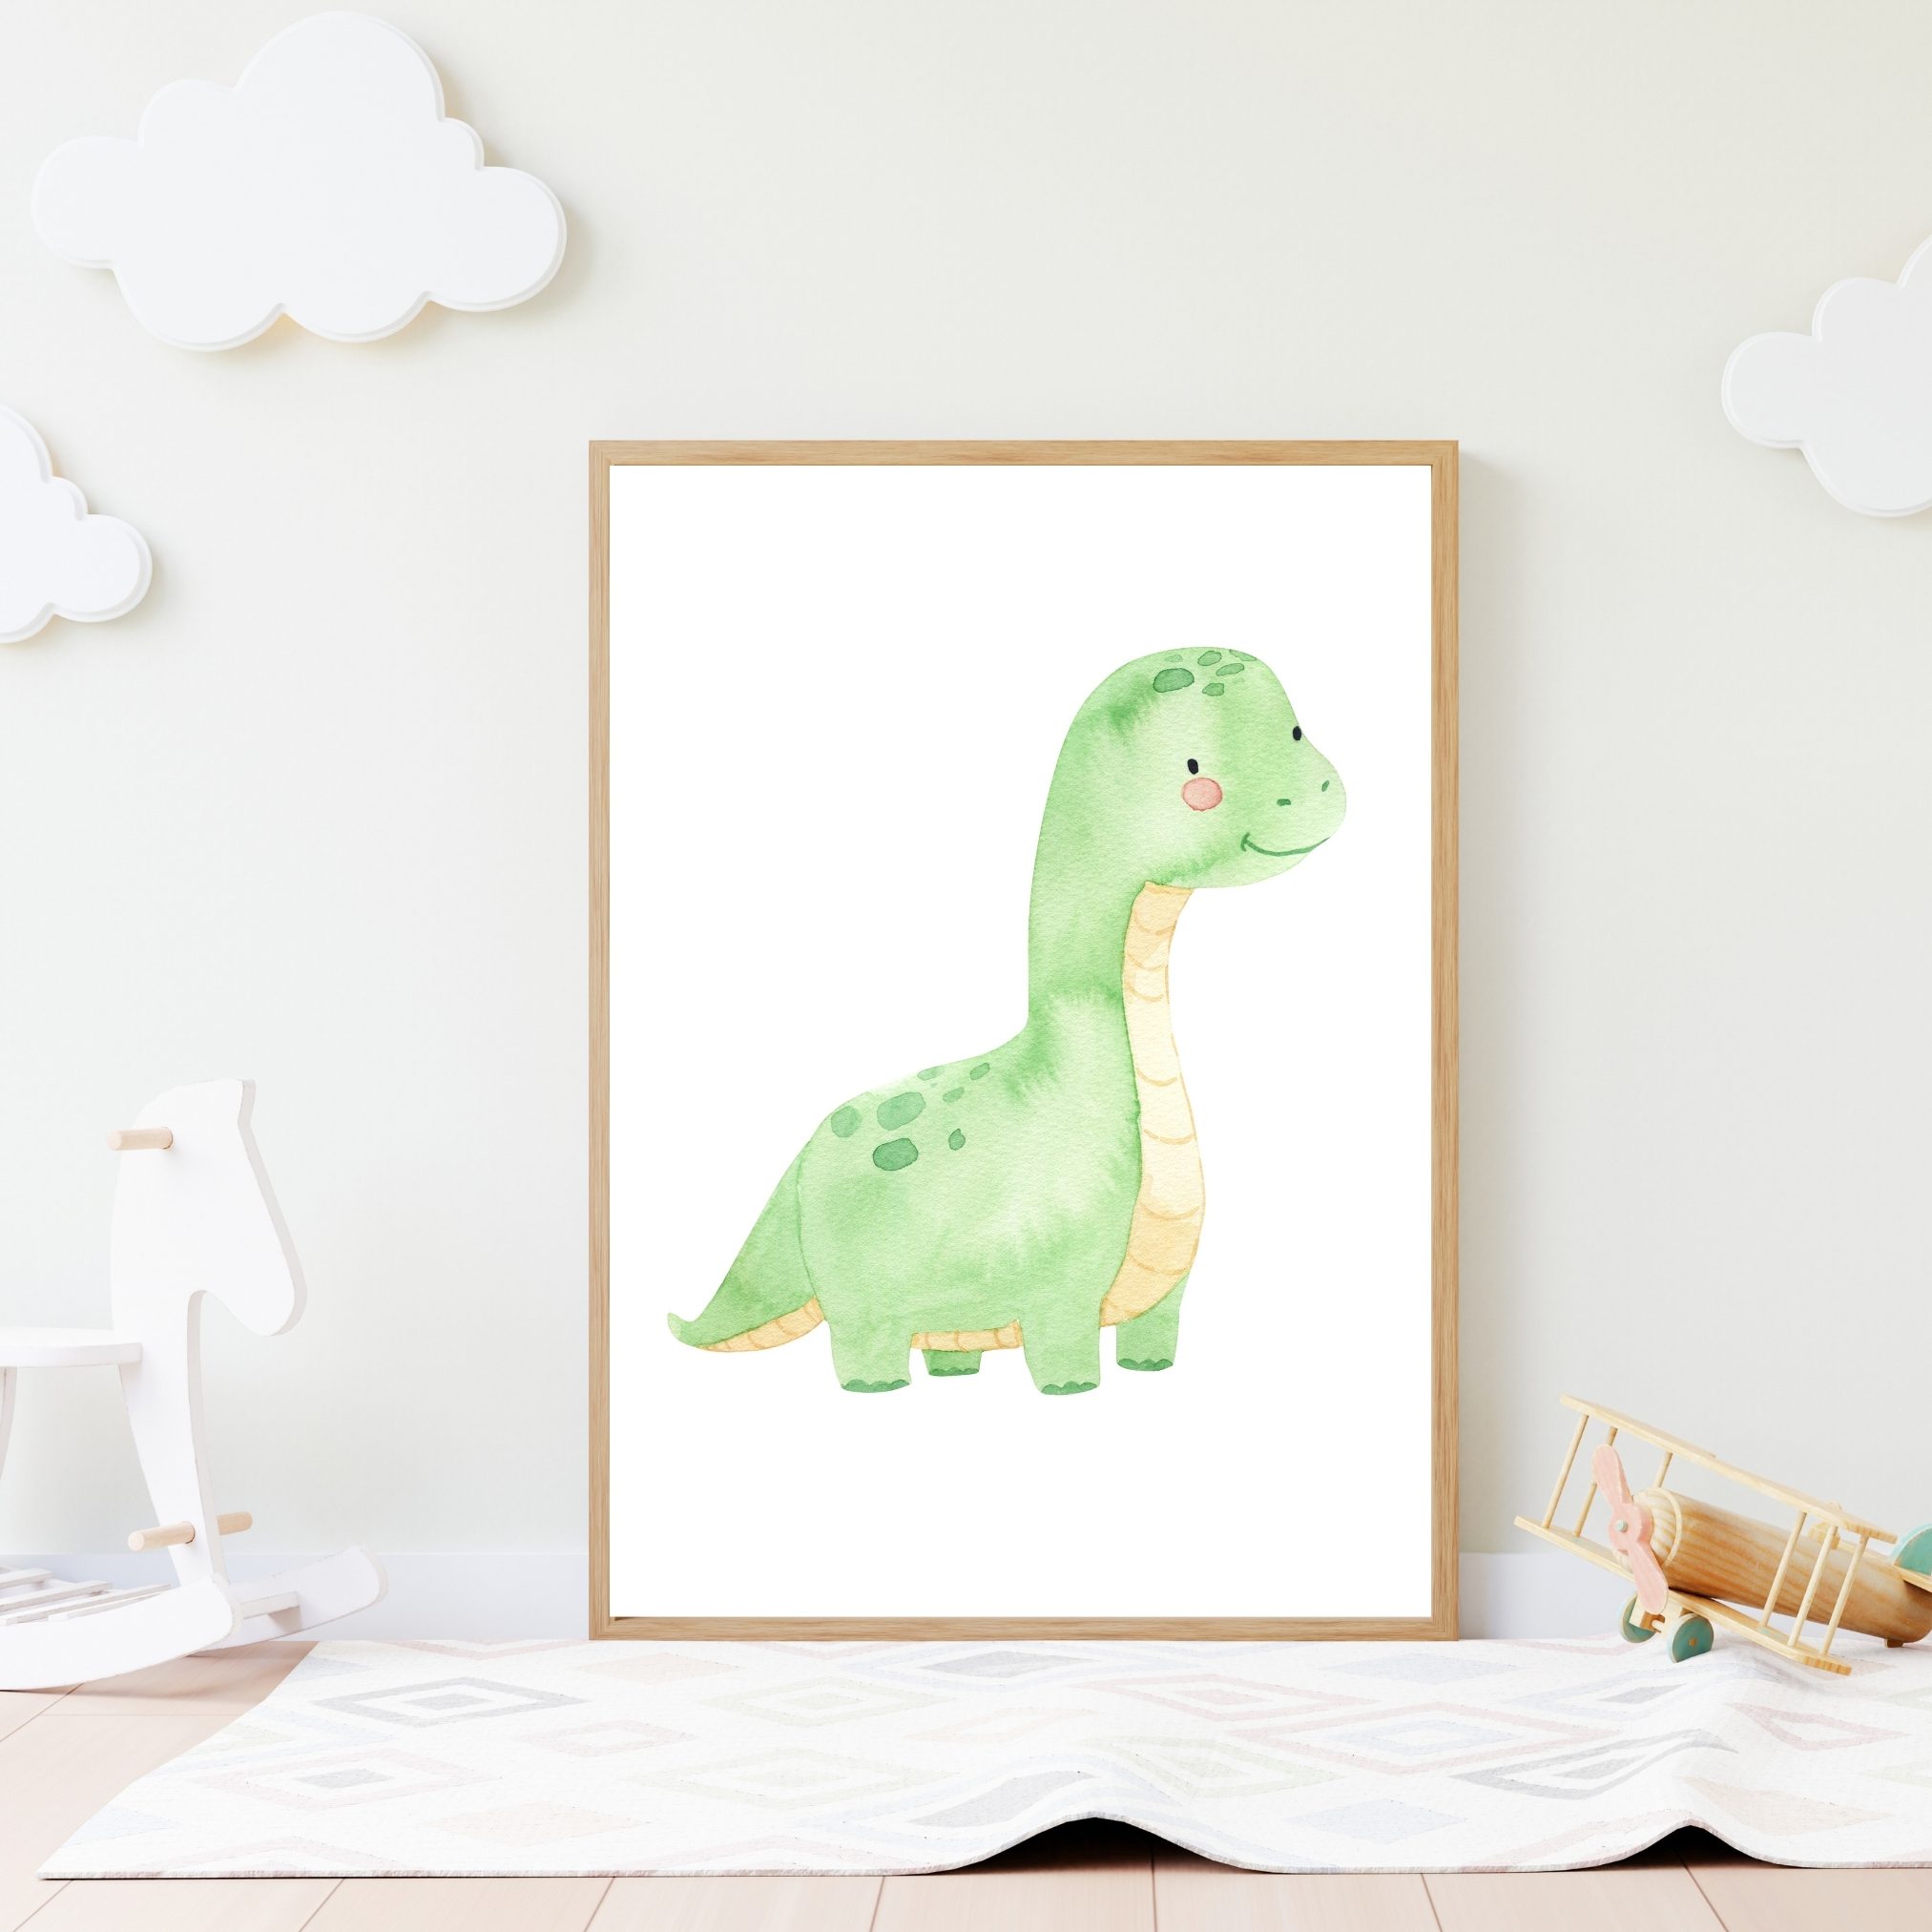 Kinderbild Kinderposter "Dinosaurier", A4 & A3 Poster Dino, Kinderzimmer, Kinderbilder, Bild Babyzimmer, Brachiosaurus, Poster Baby Geschenk